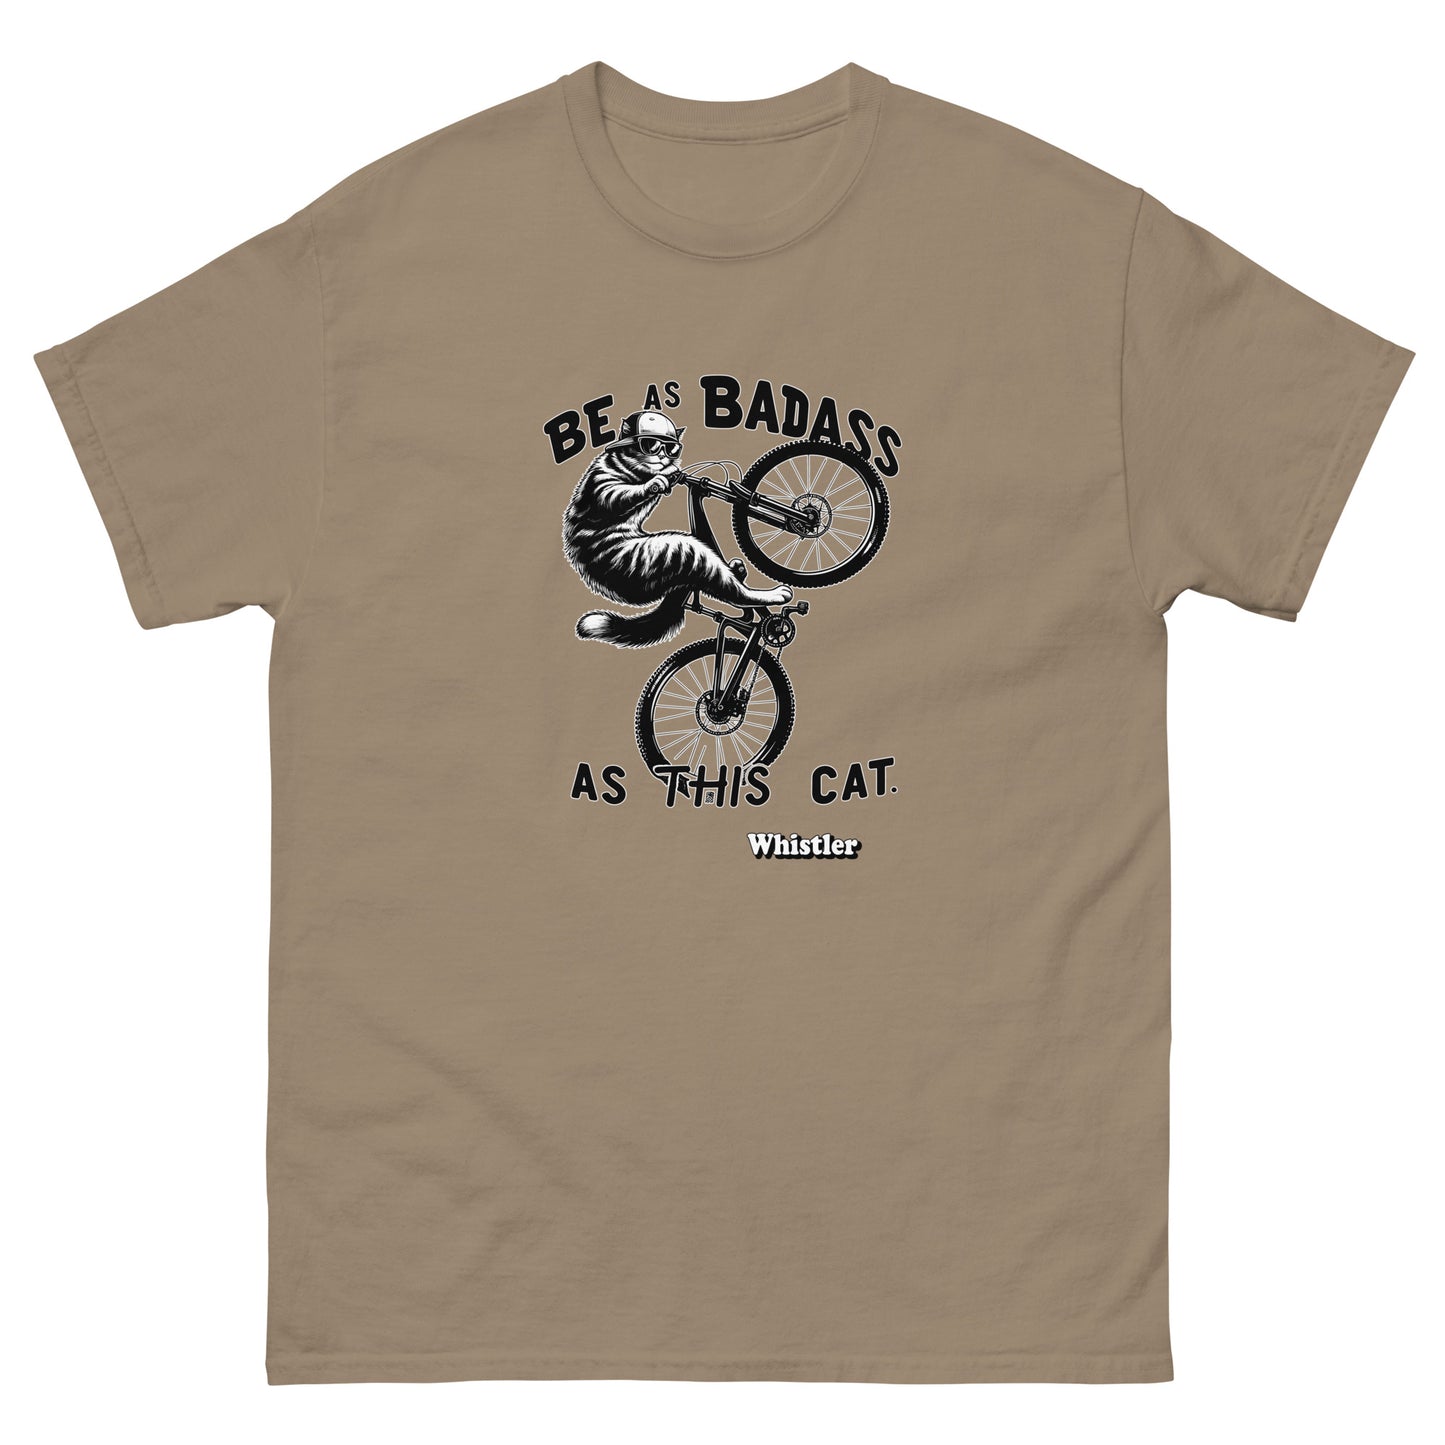 Be As Badass as This Cat T-shirt